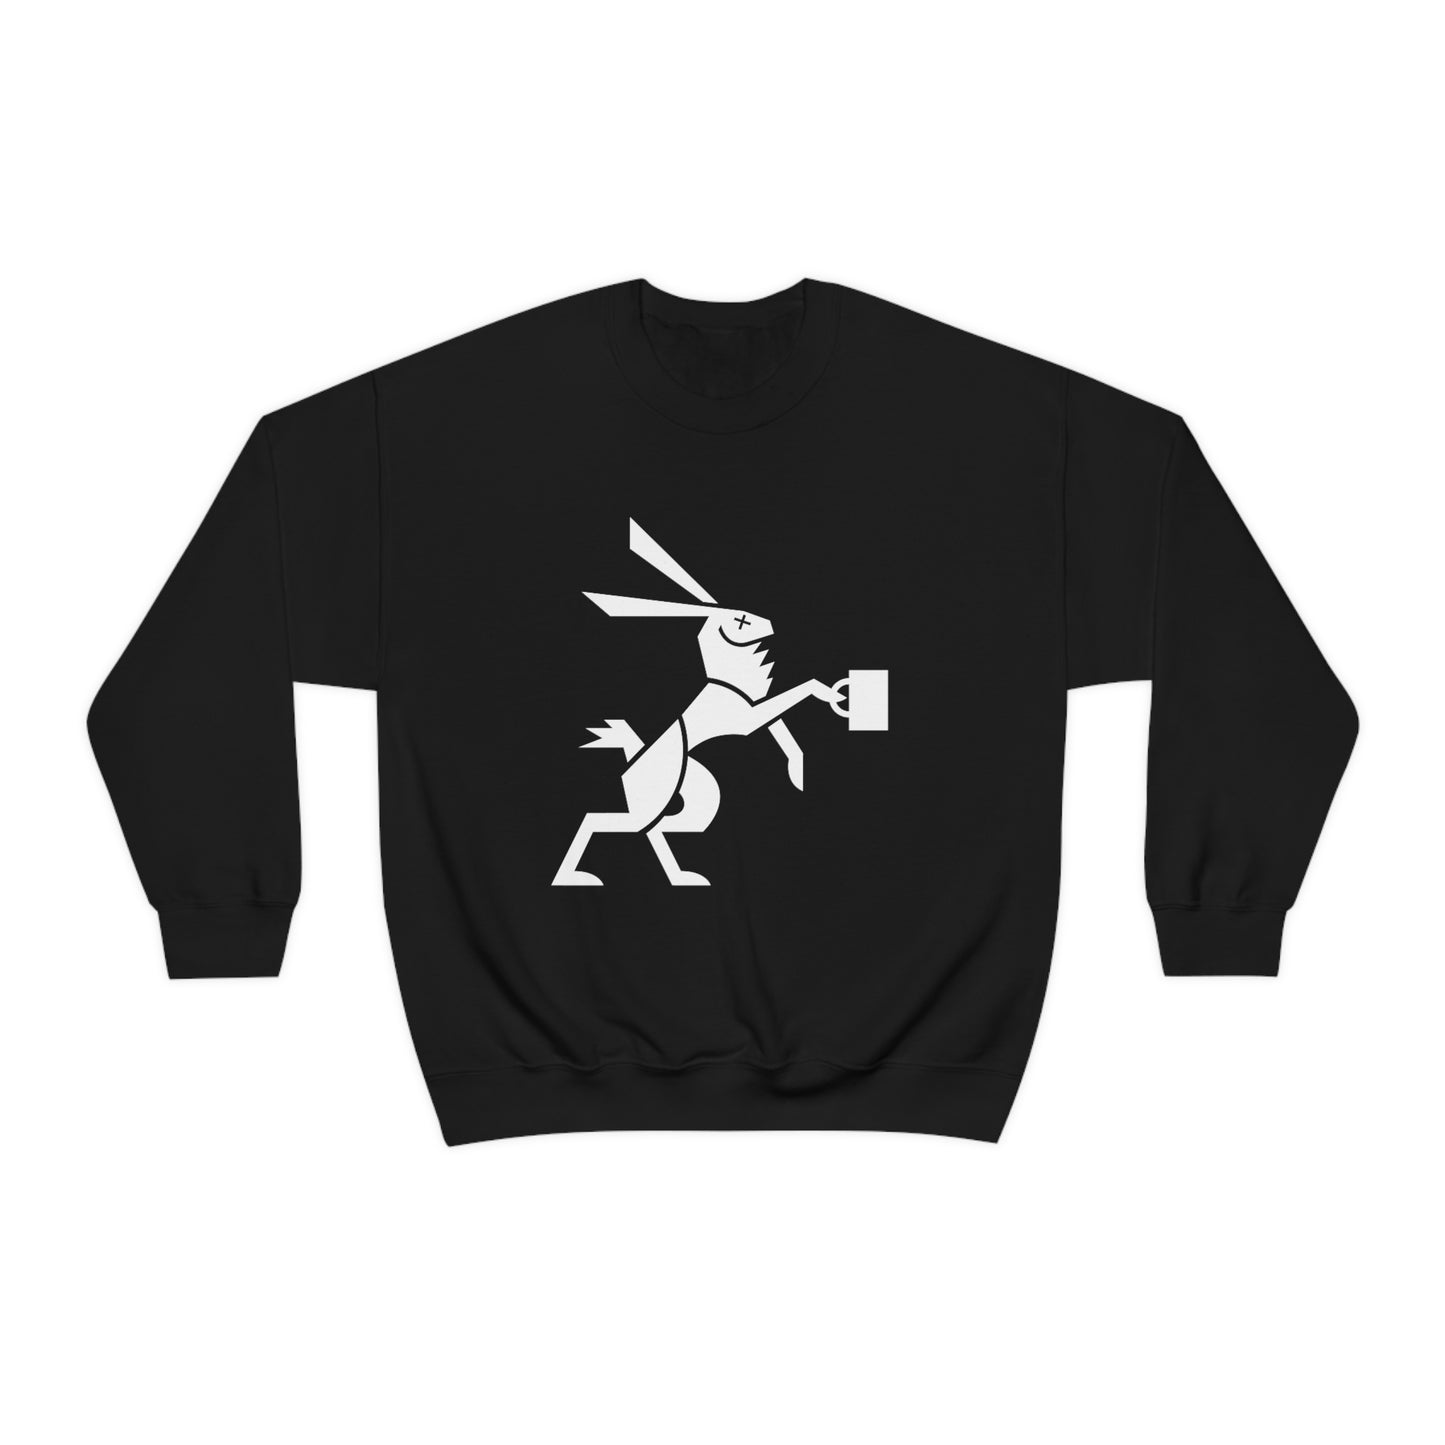 Drunk Rabbit Unisex Heavy Blend™ Crewneck Sweatshirt